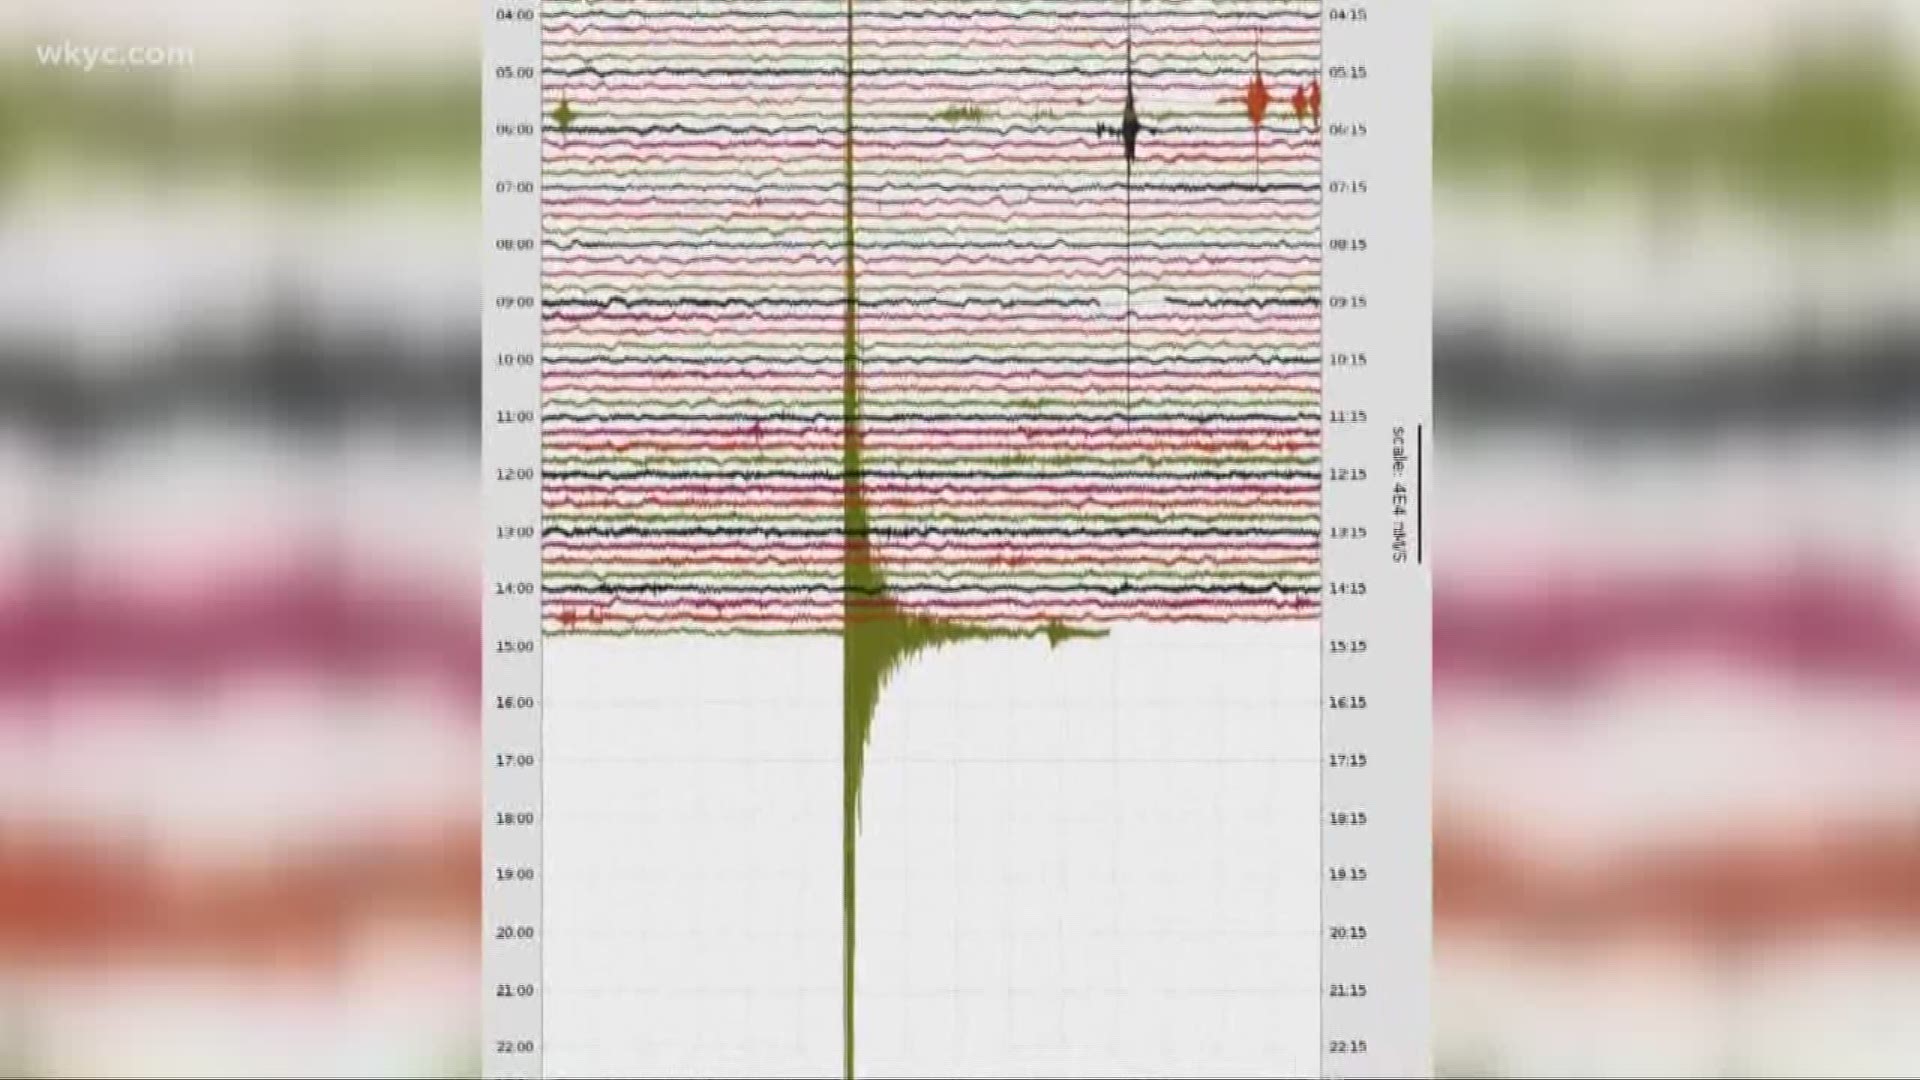 Earthquakes aren't rare for Ohio